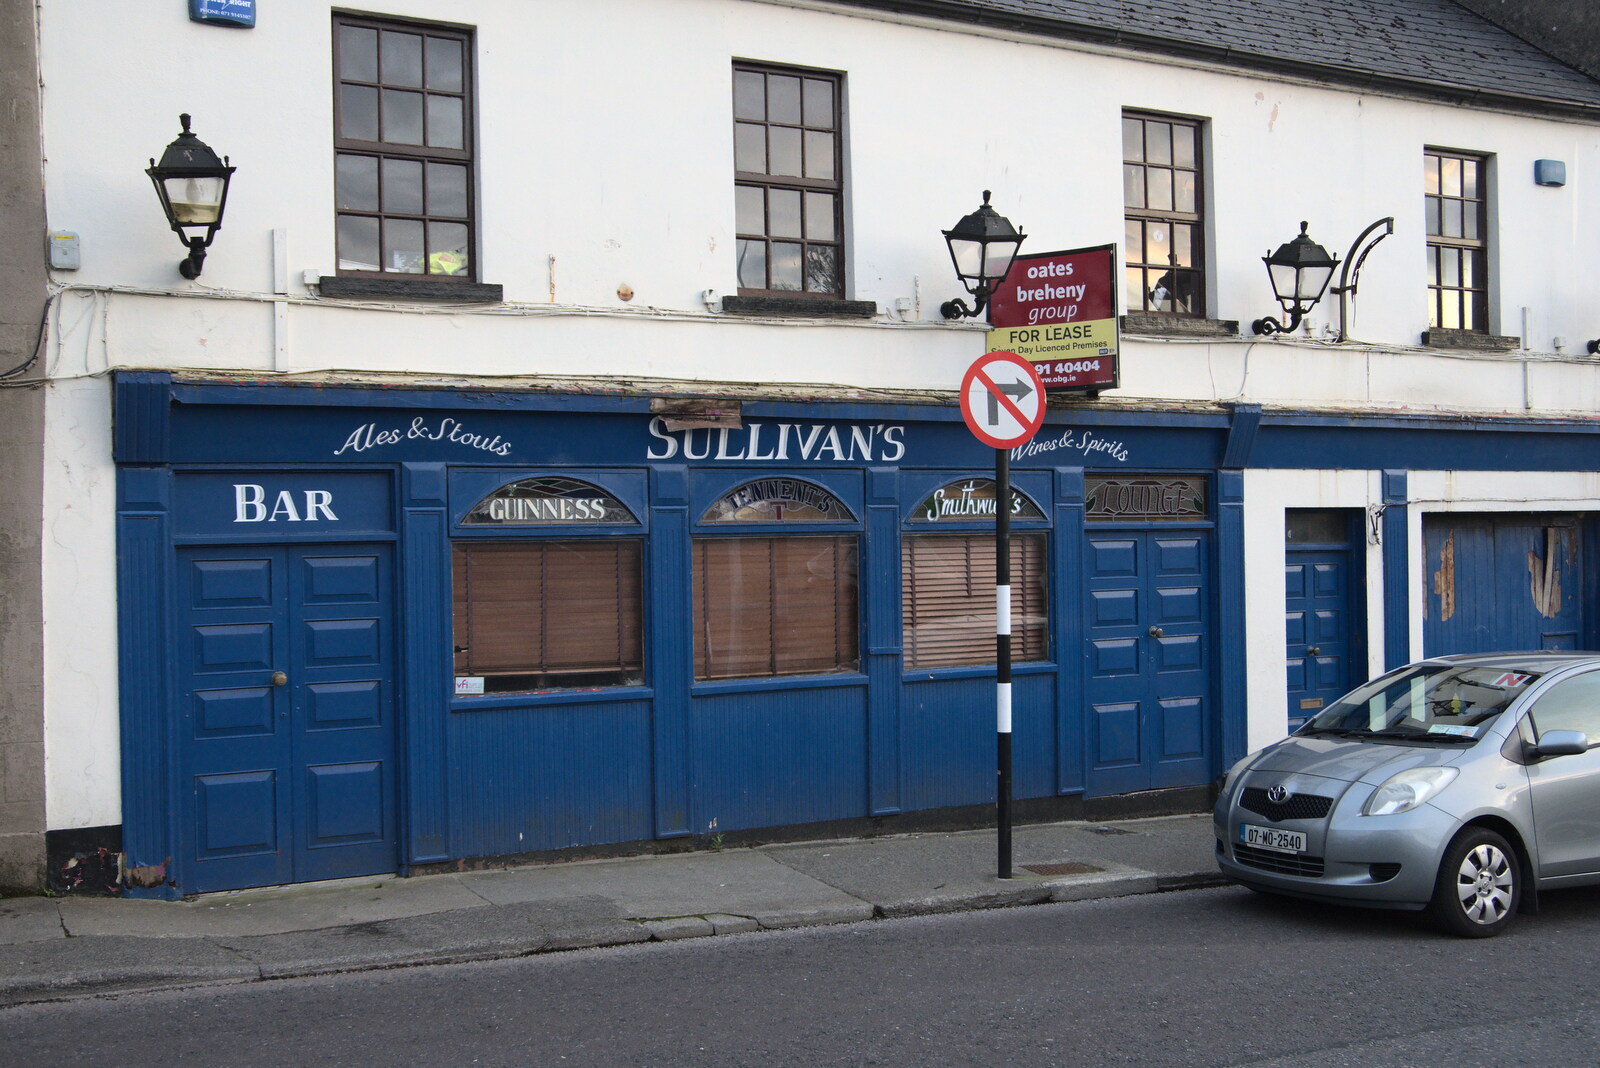 Pints of Guinness and Streedagh Beach, Grange and Sligo, Ireland - 9th August 2021: The closed-down Sullivan's bar